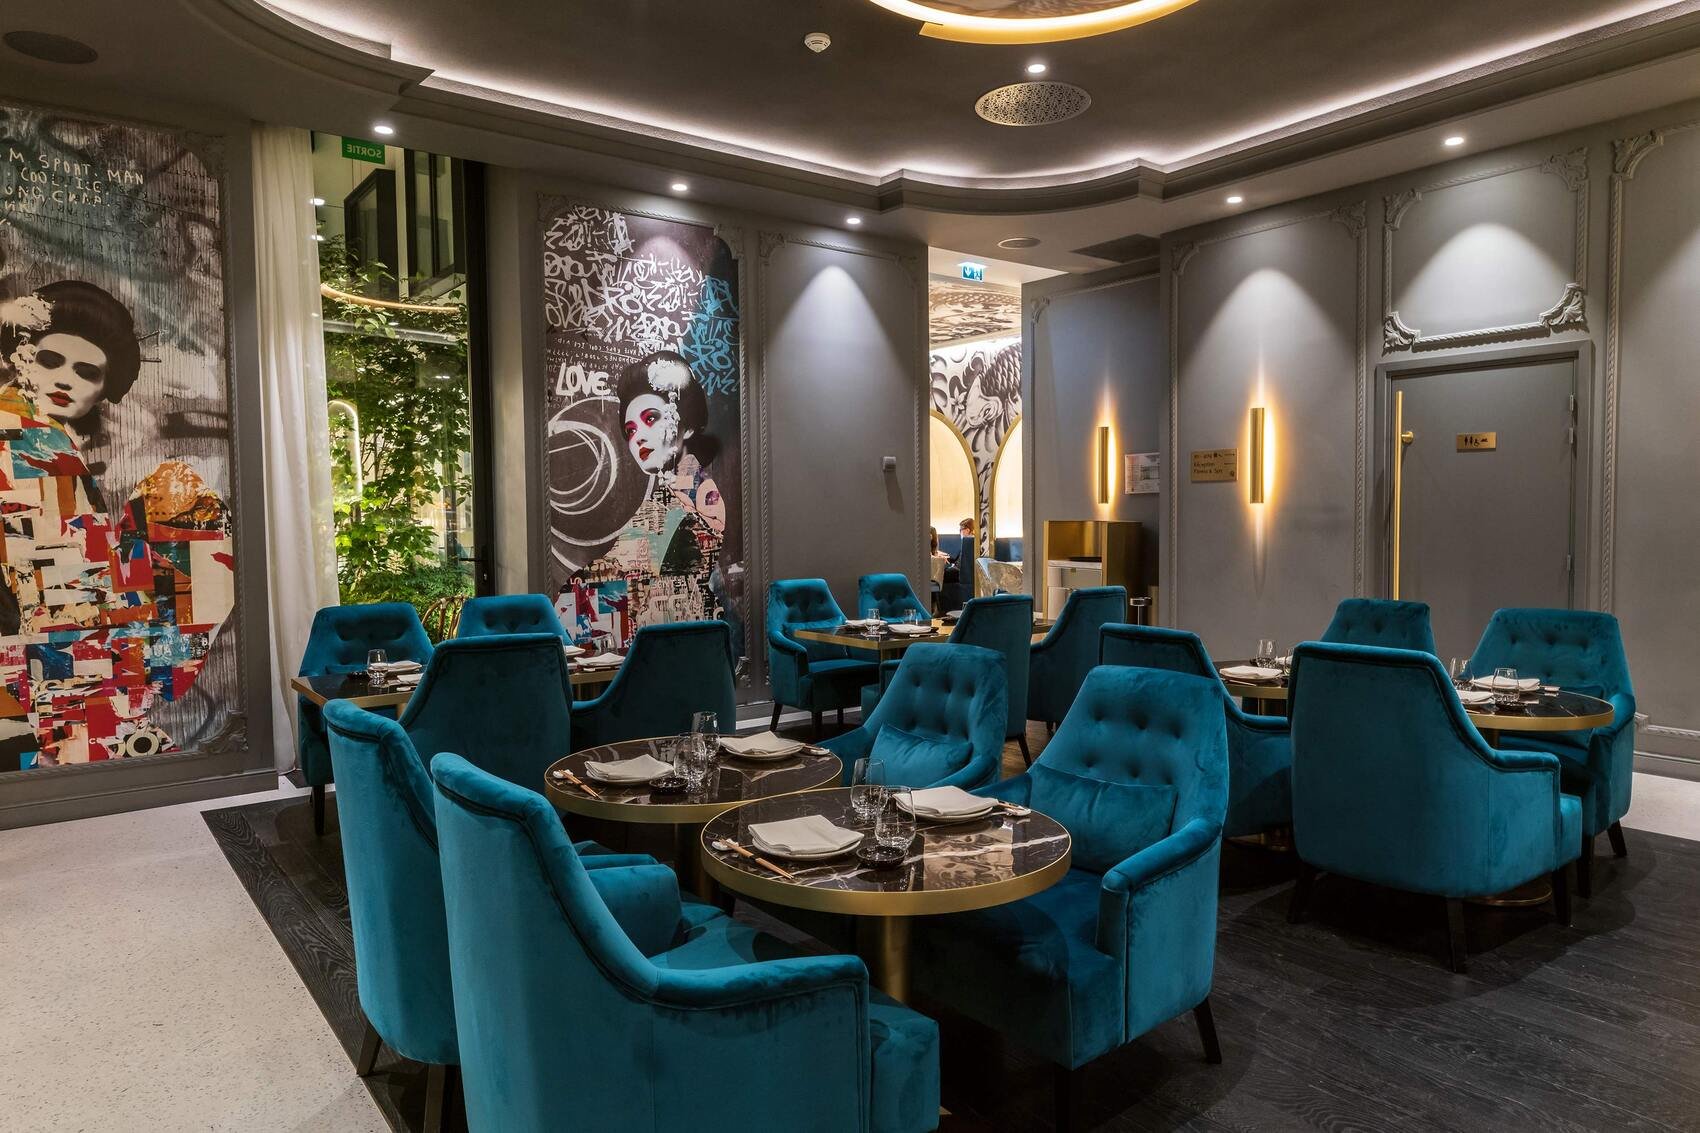 Luxury boutique hotel - Maison Albar Hotels Le Vendome 5 stars - bar Japanese restaurant Yakuza Chef Olivier Da Costa